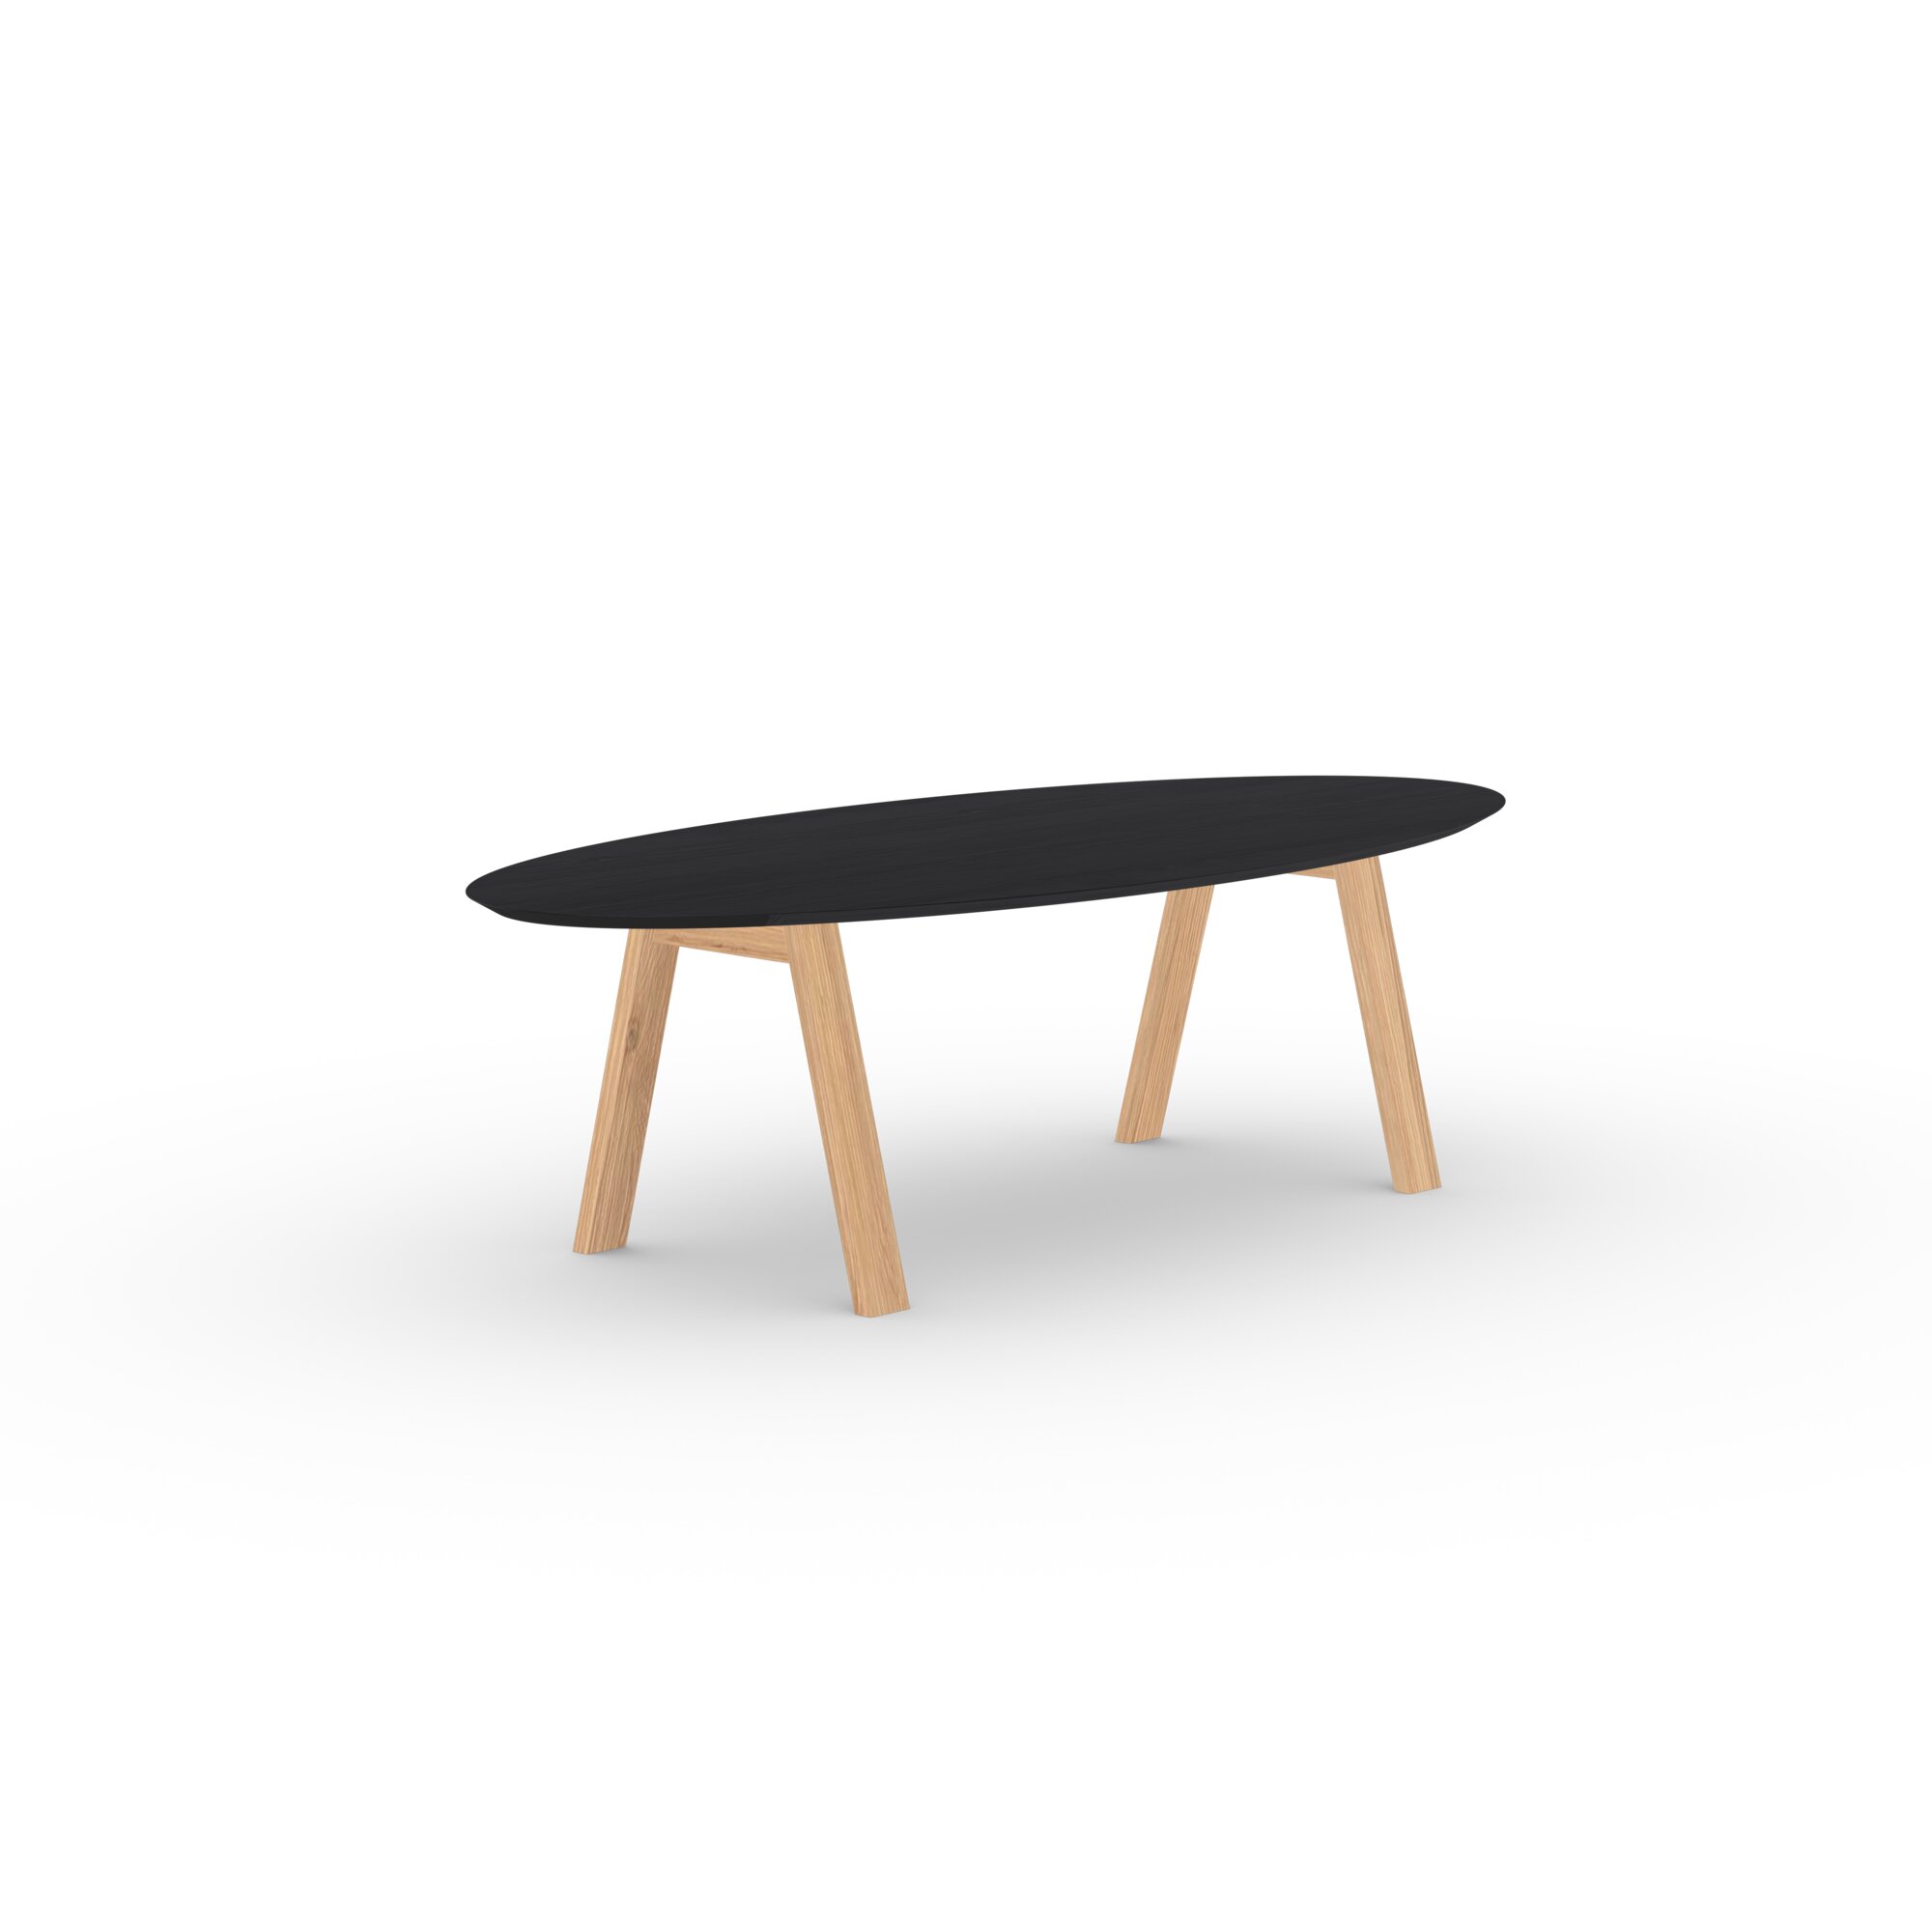 Ovale Design dining table | Legno Oak natural lacquer | Oak black lacquer | Studio HENK| 